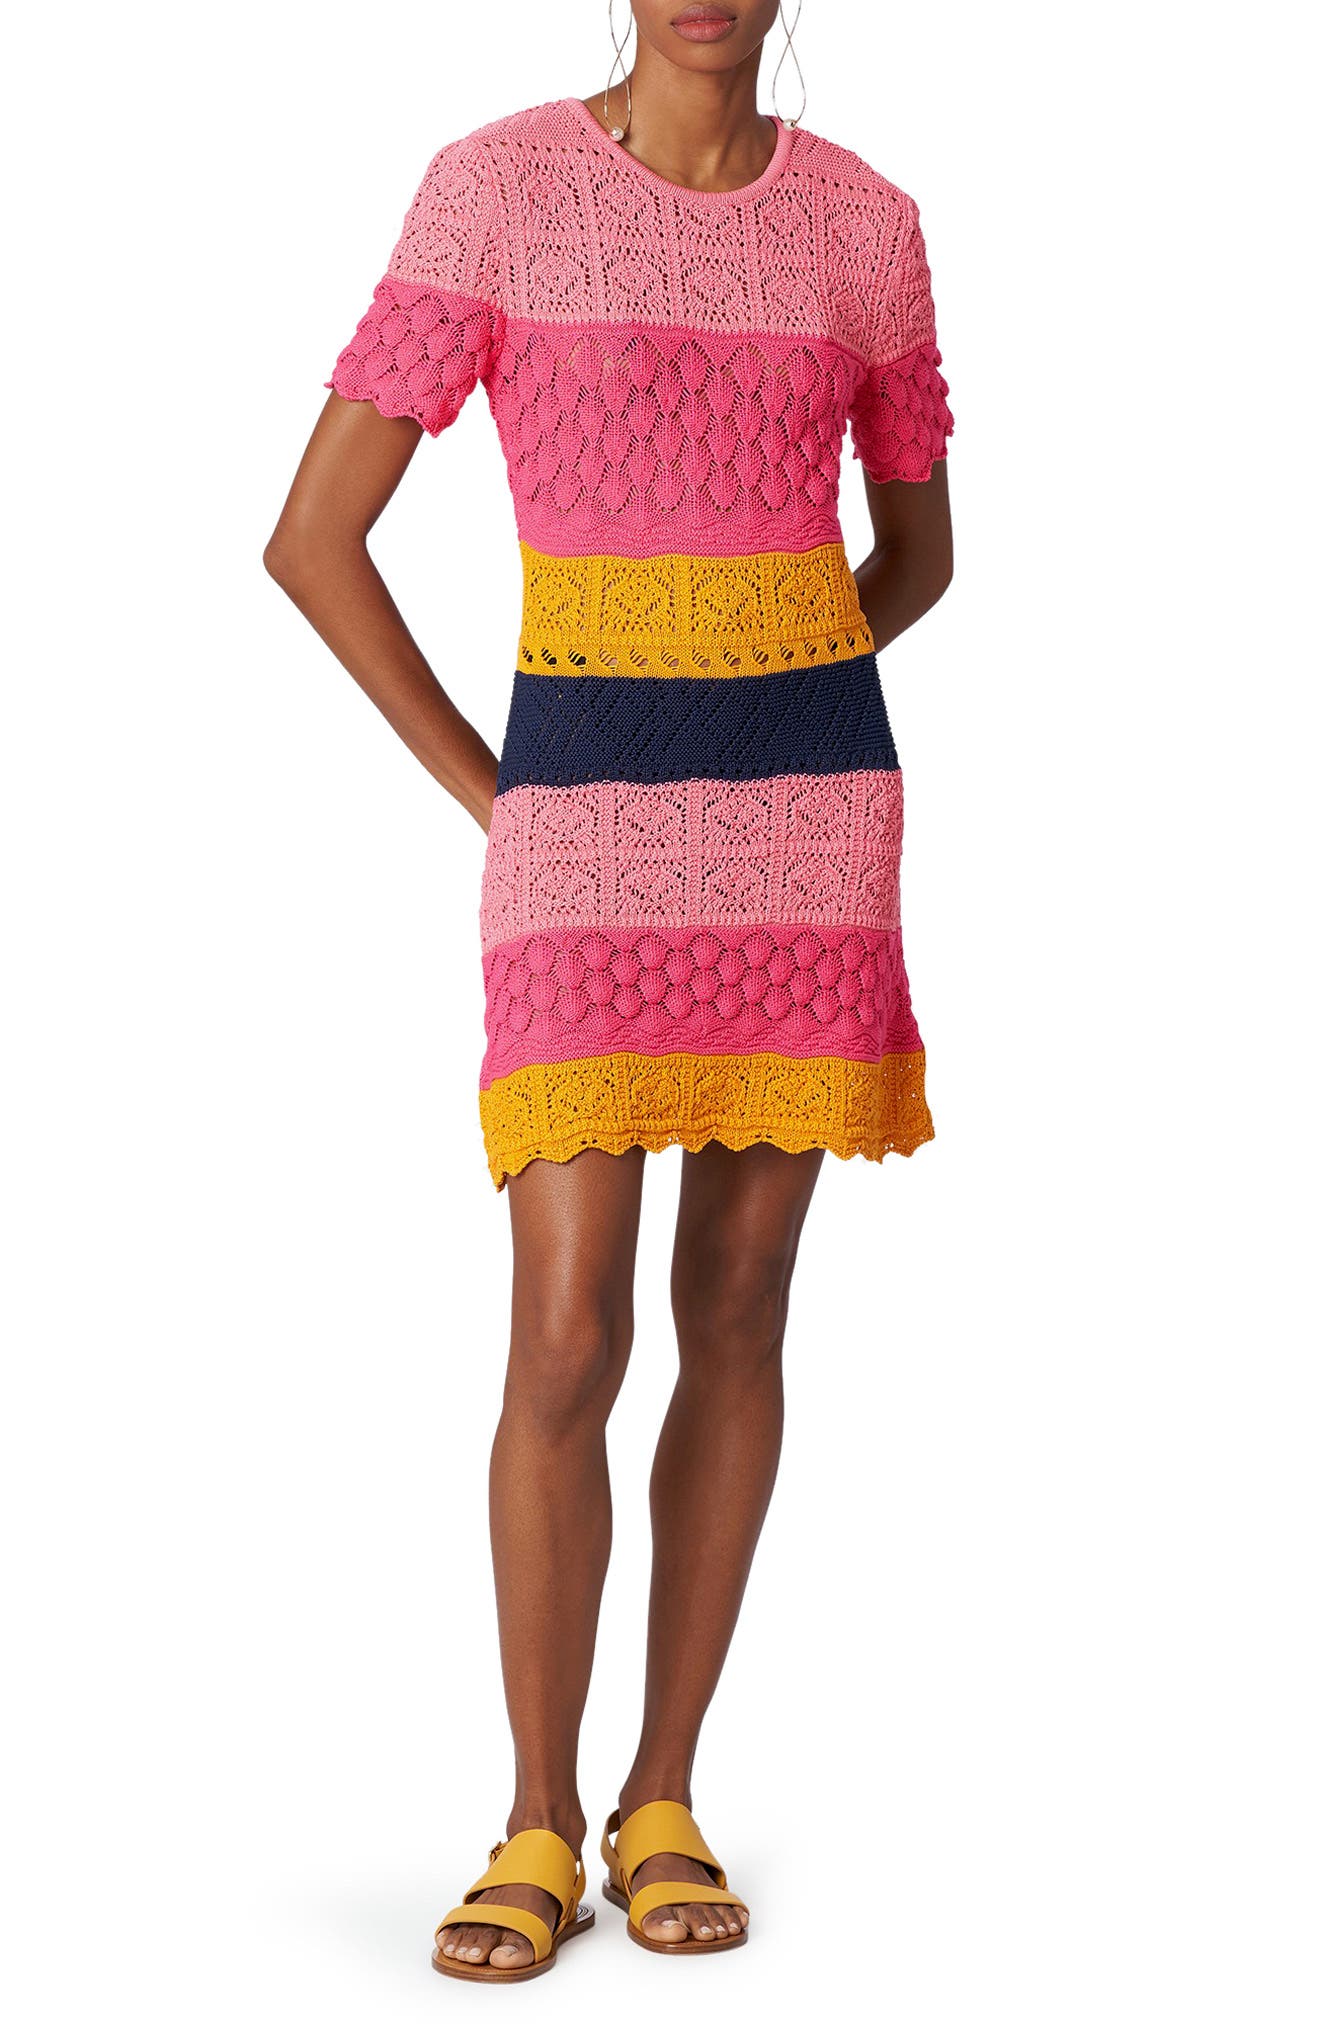 Carolina Herrera Colorblock Short Sleeve Cotton Sweater Dress in Multi at Nordstrom, Size Small